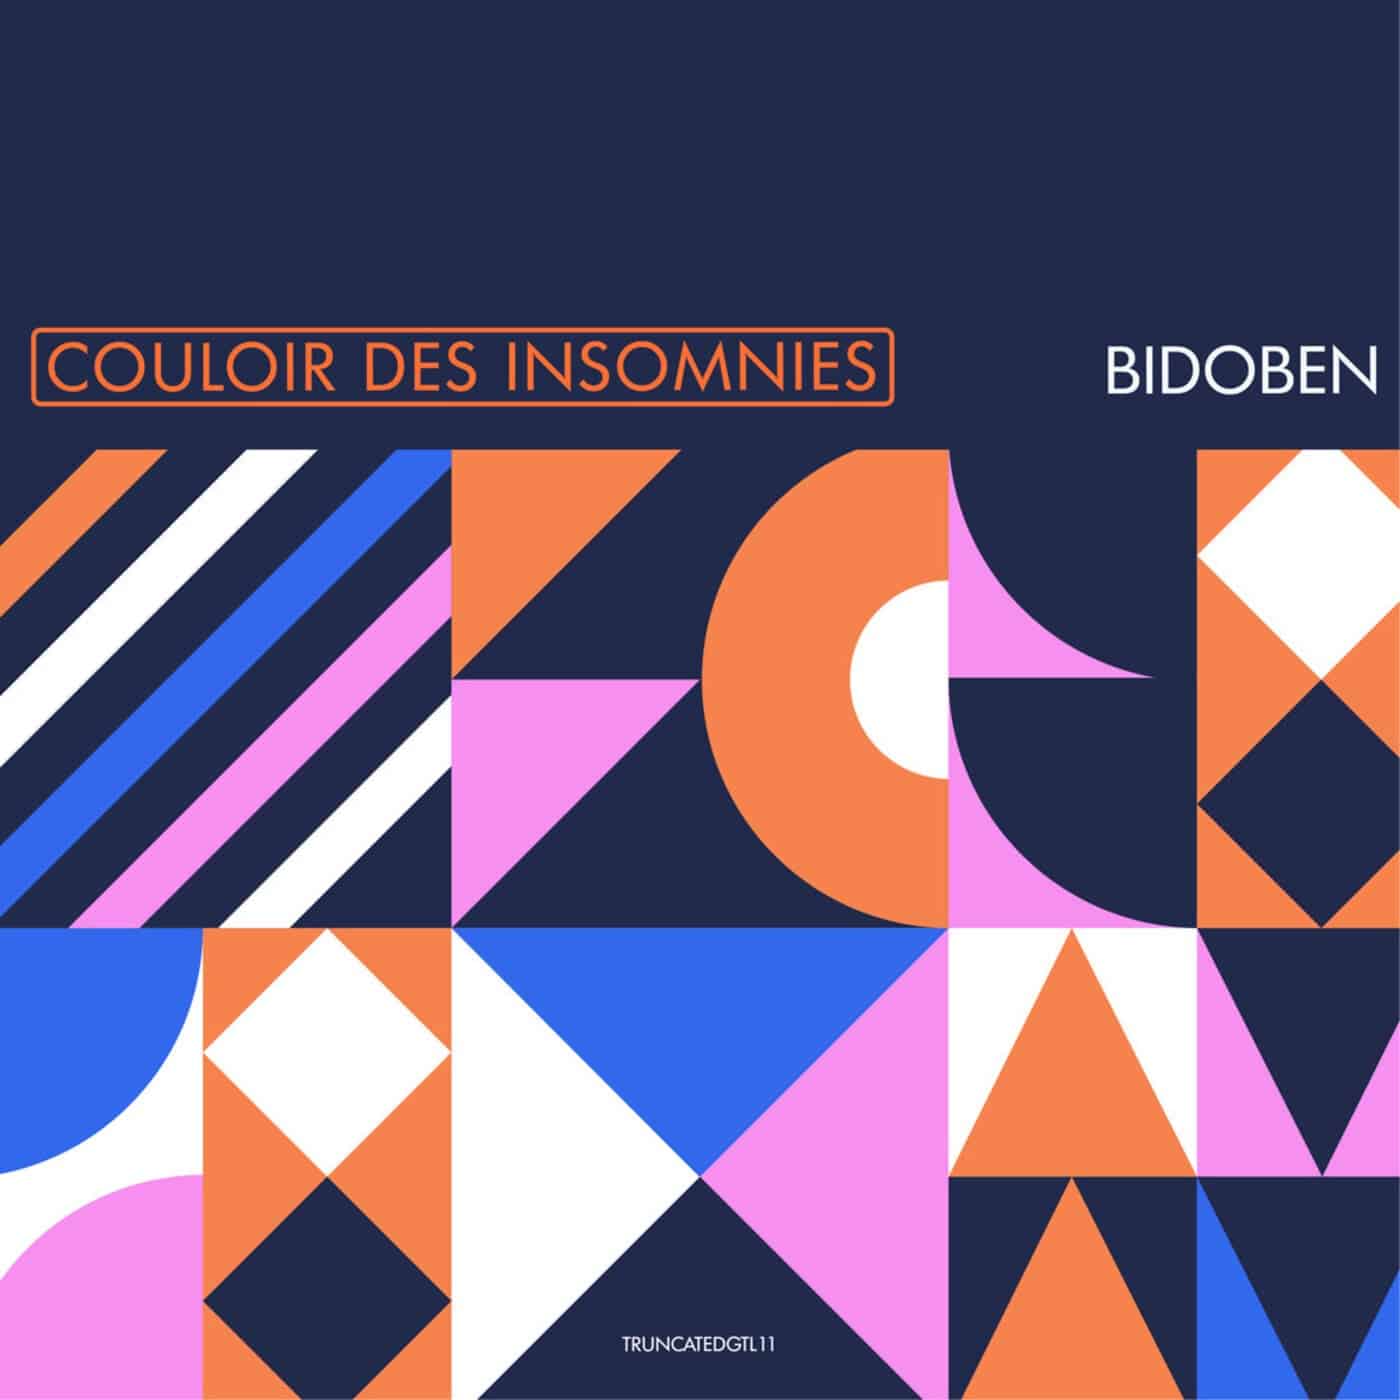 image cover: Bidoben - Couloir Des Insomnies / TRUNCATEDGTL11